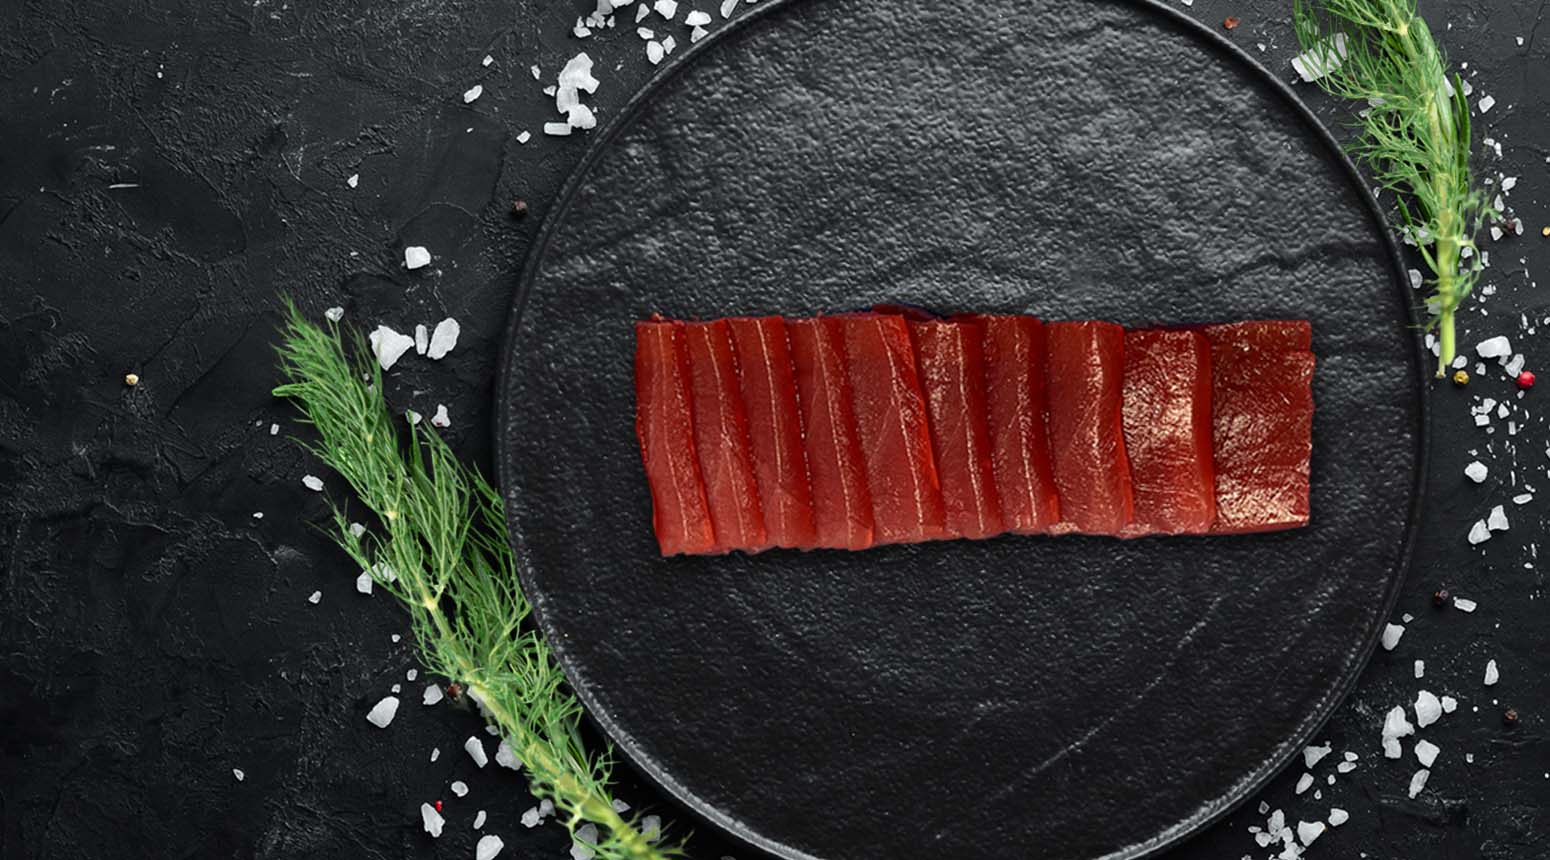 Sashimi van tonijn